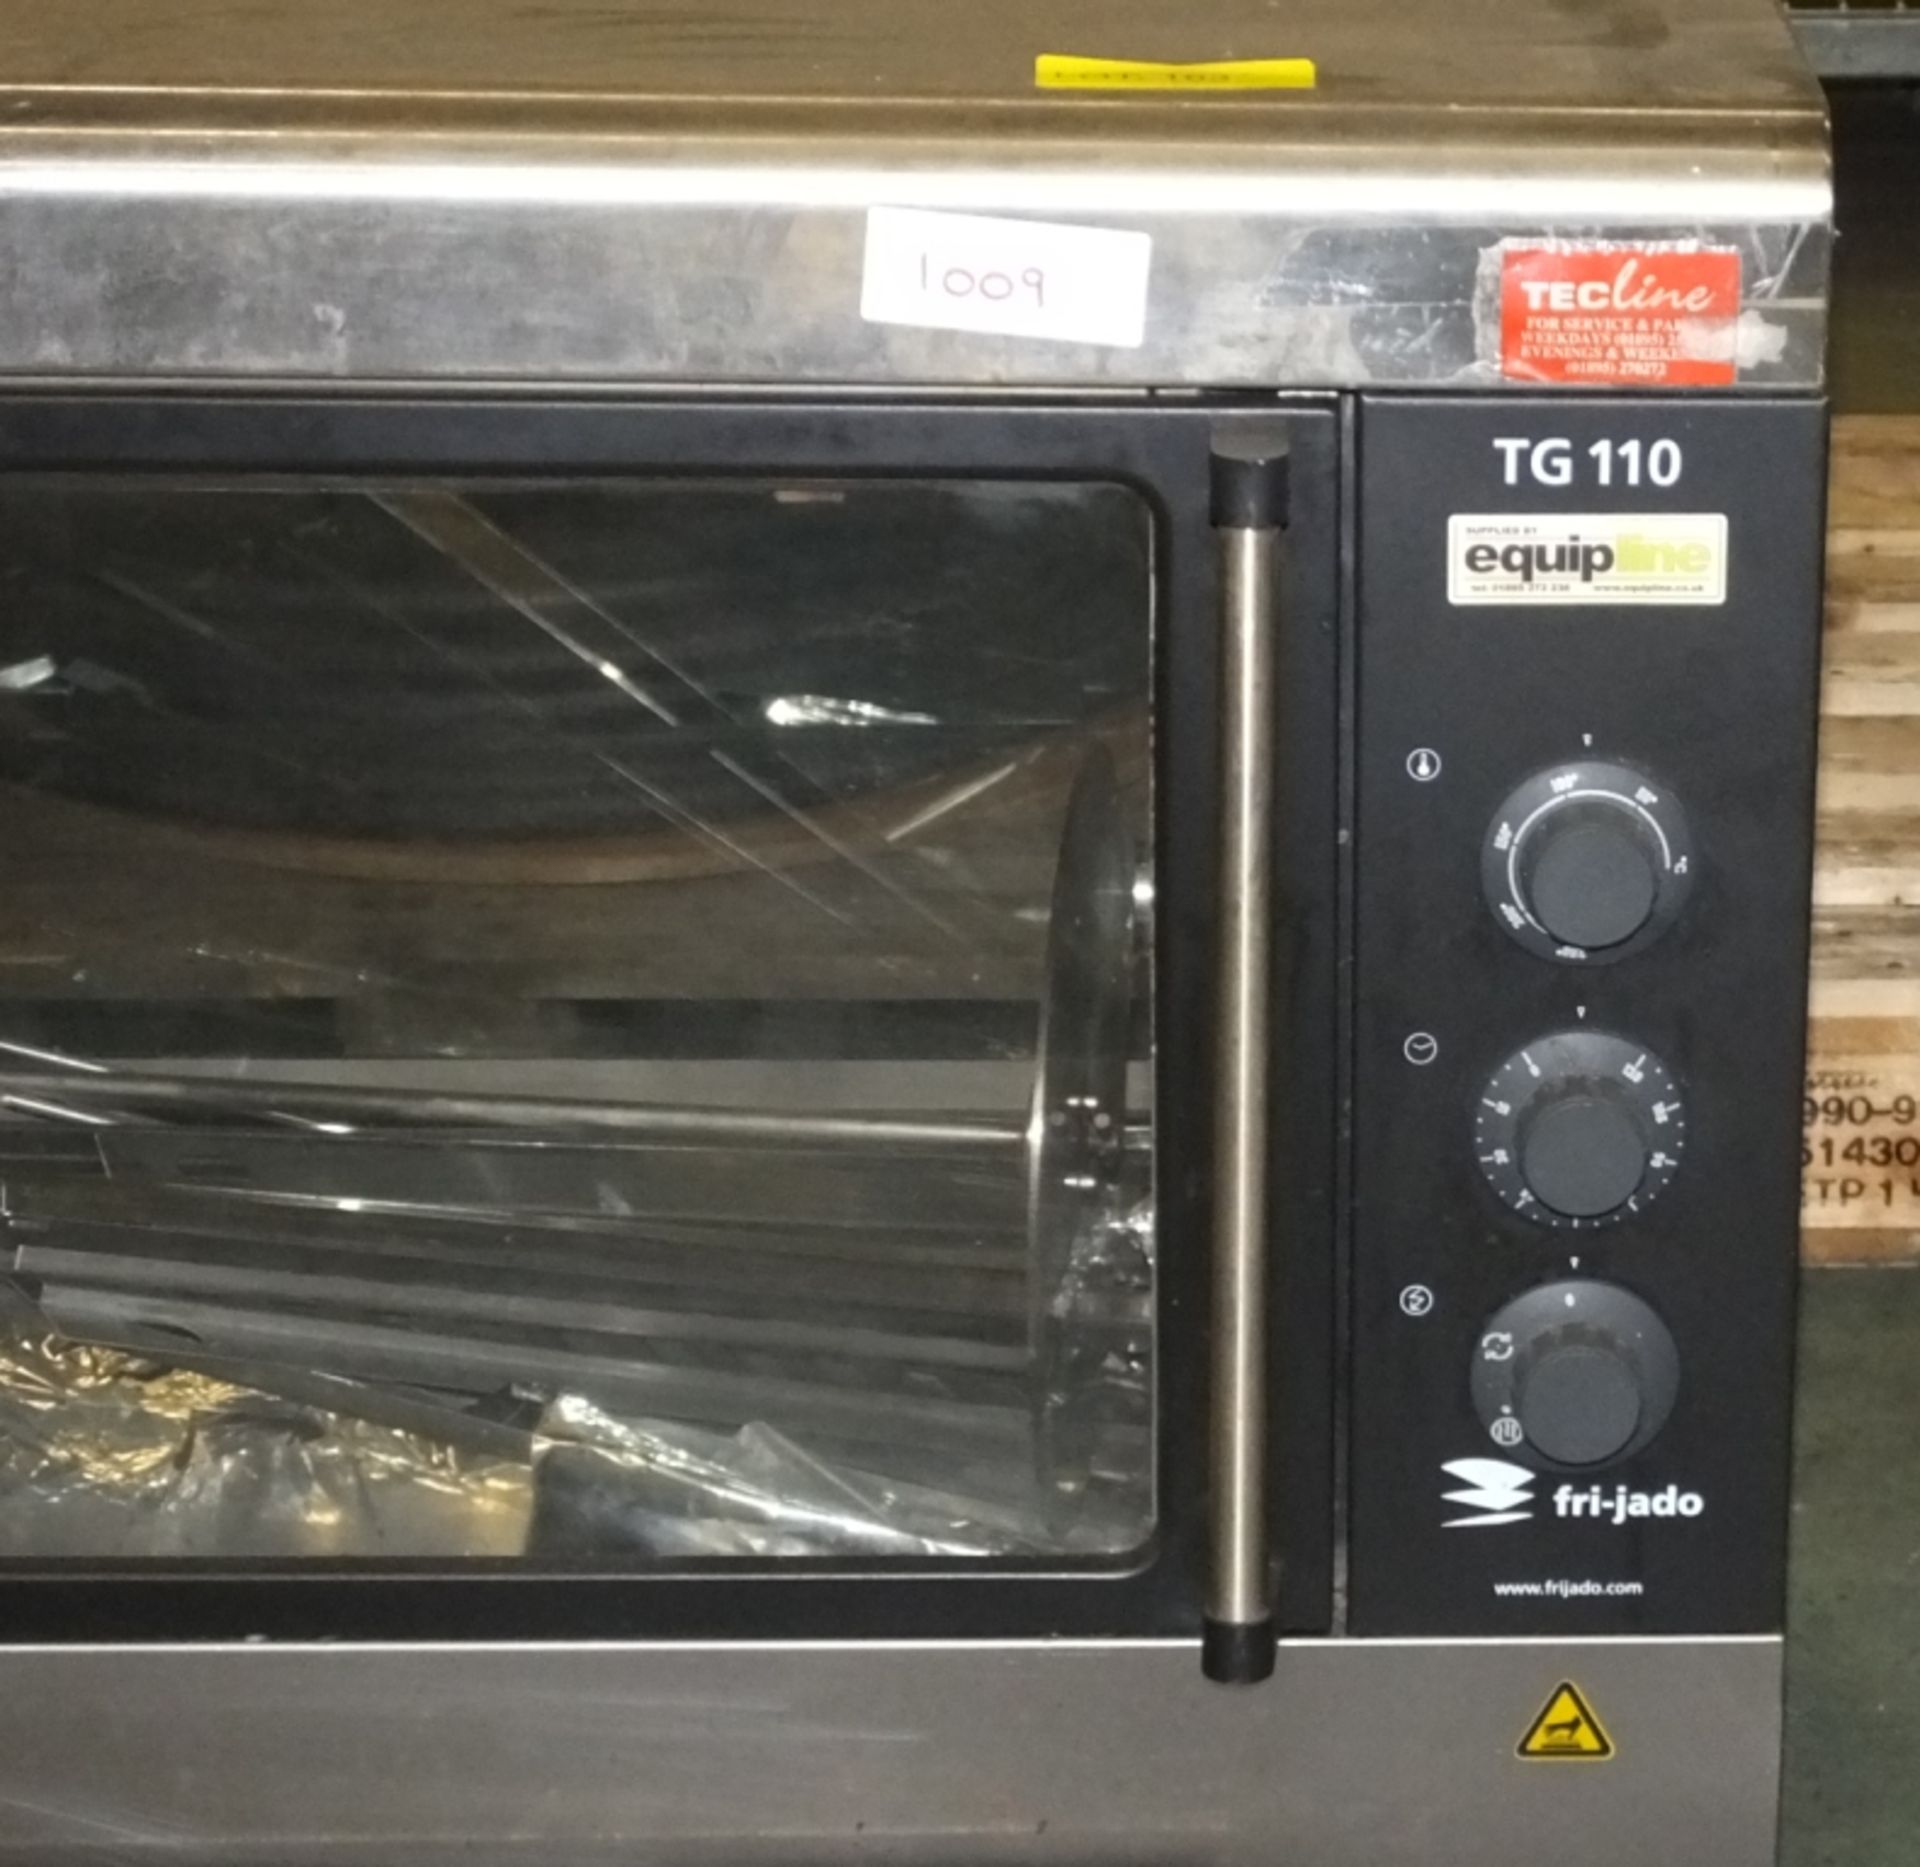 Fri-Jadon Rotisserie oven - TG110 - Image 2 of 3